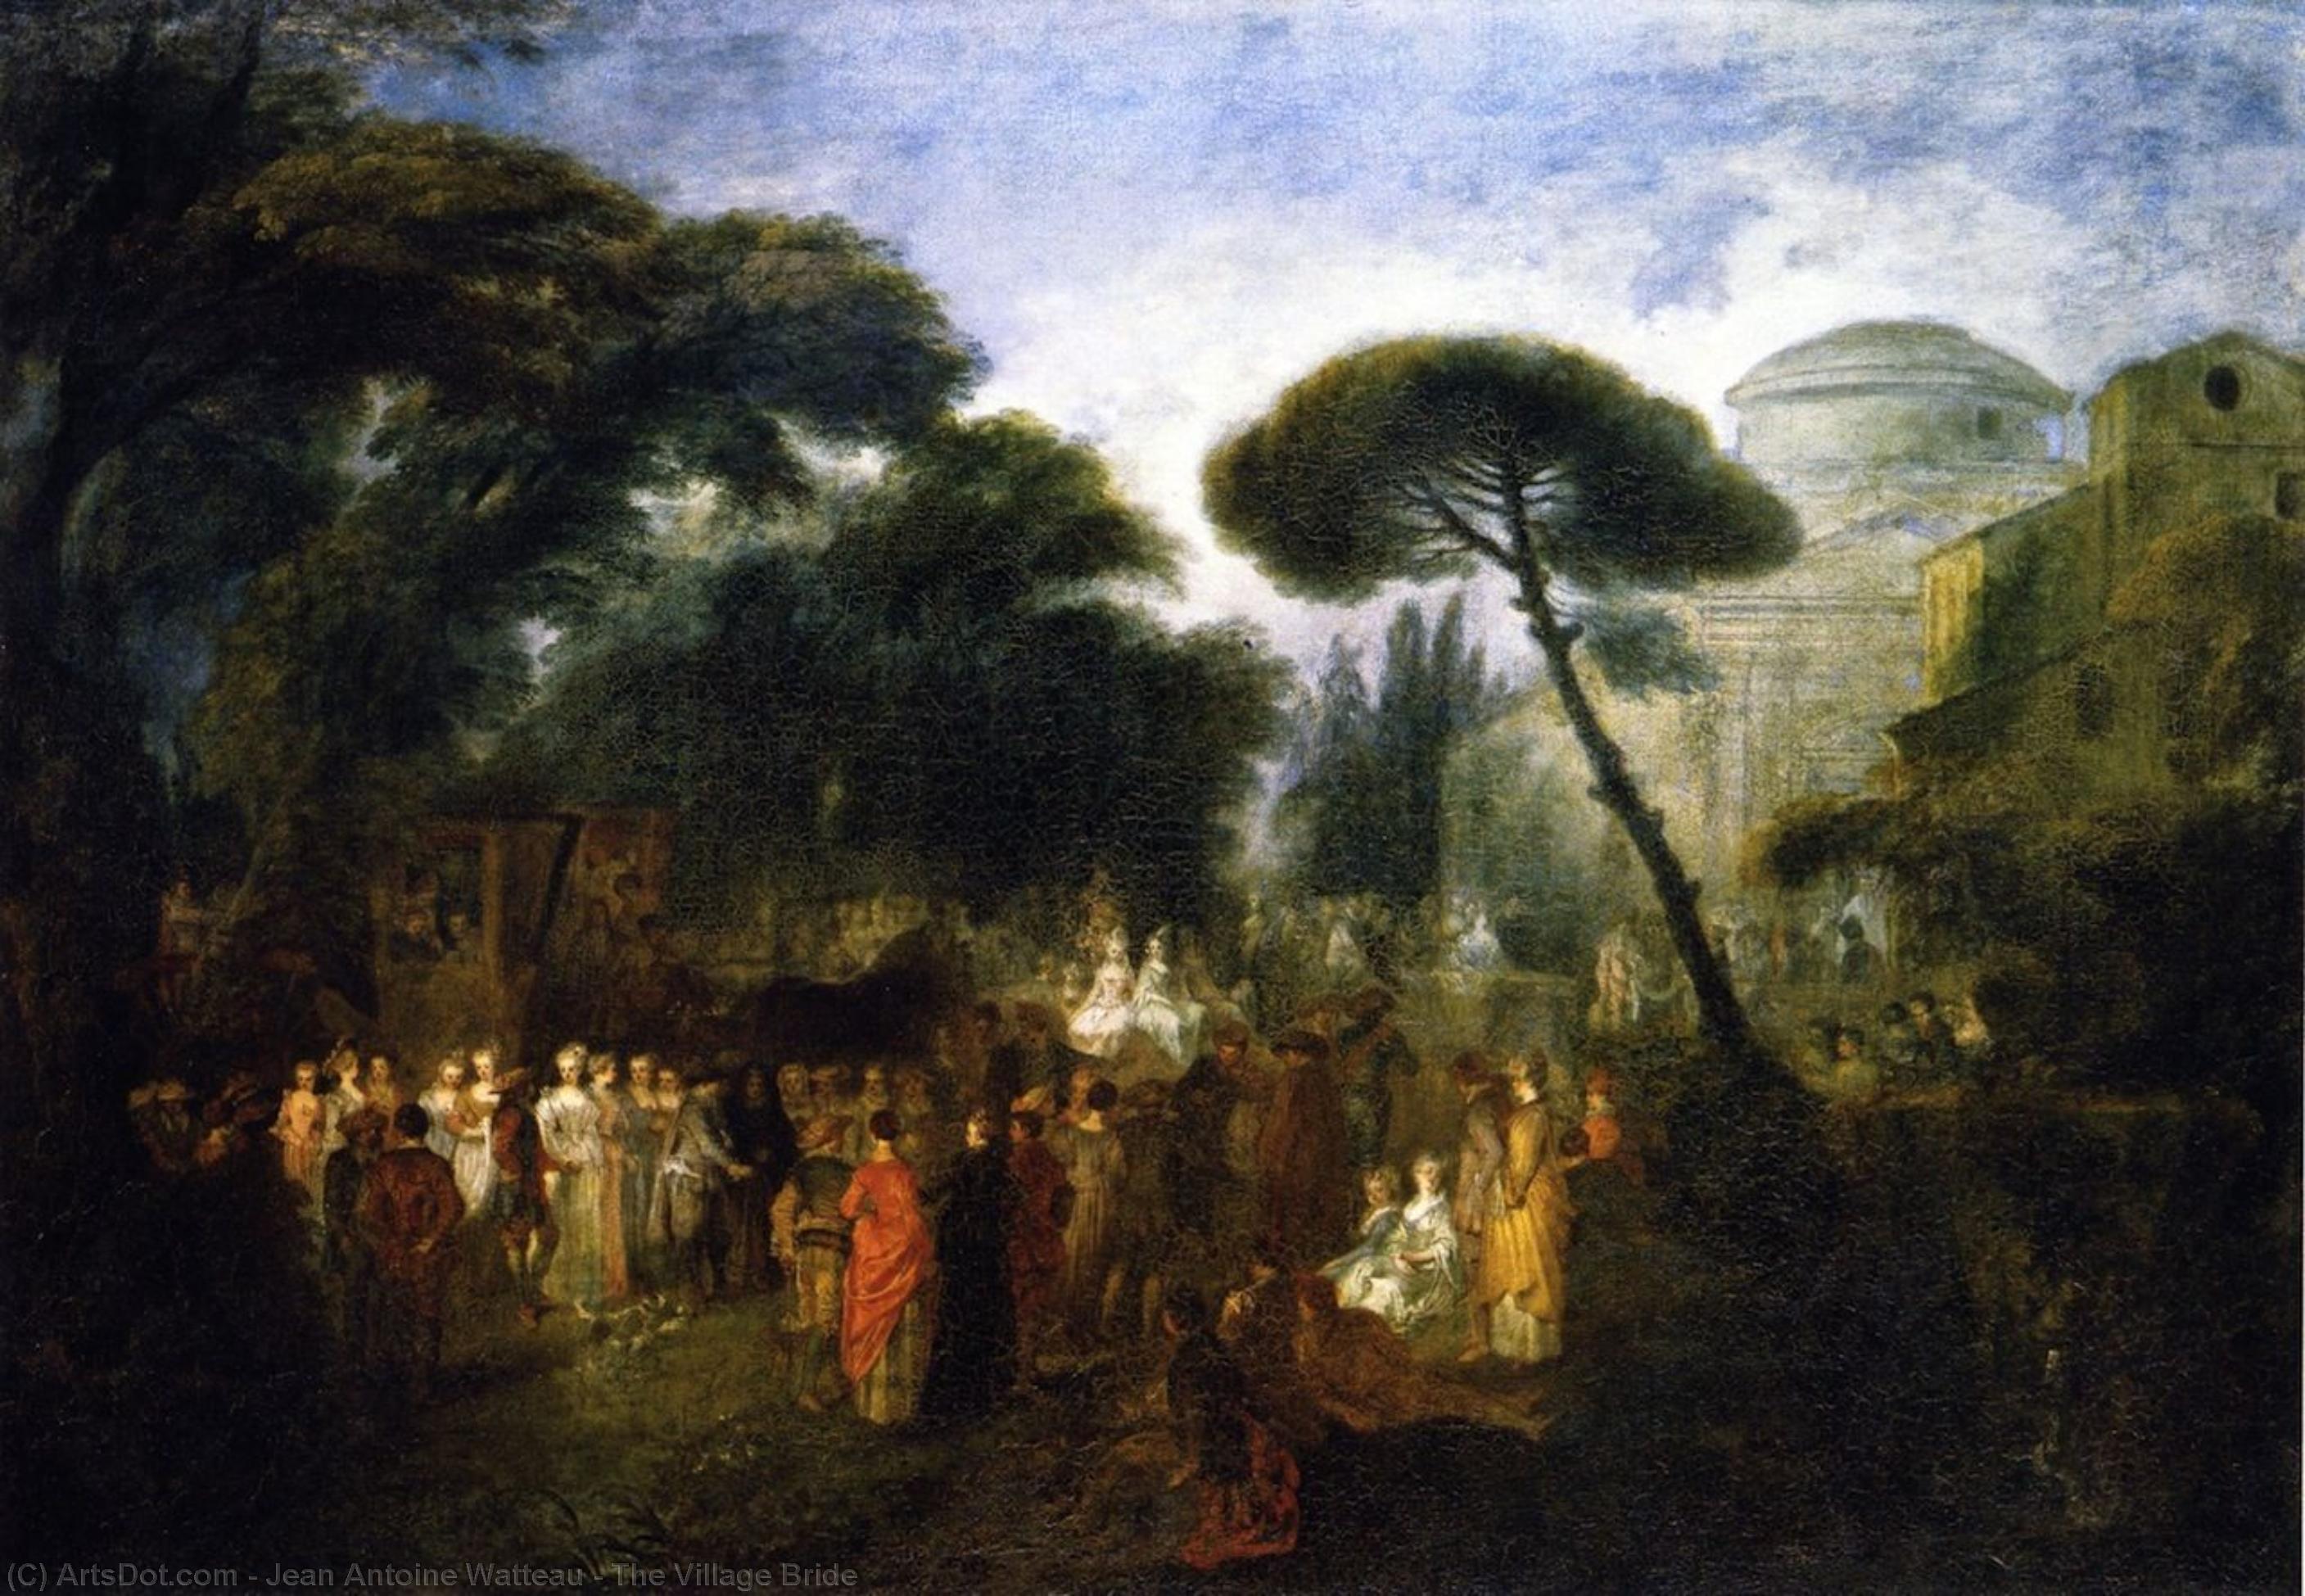 WikiOO.org - אנציקלופדיה לאמנויות יפות - ציור, יצירות אמנות Jean Antoine Watteau - The Village Bride